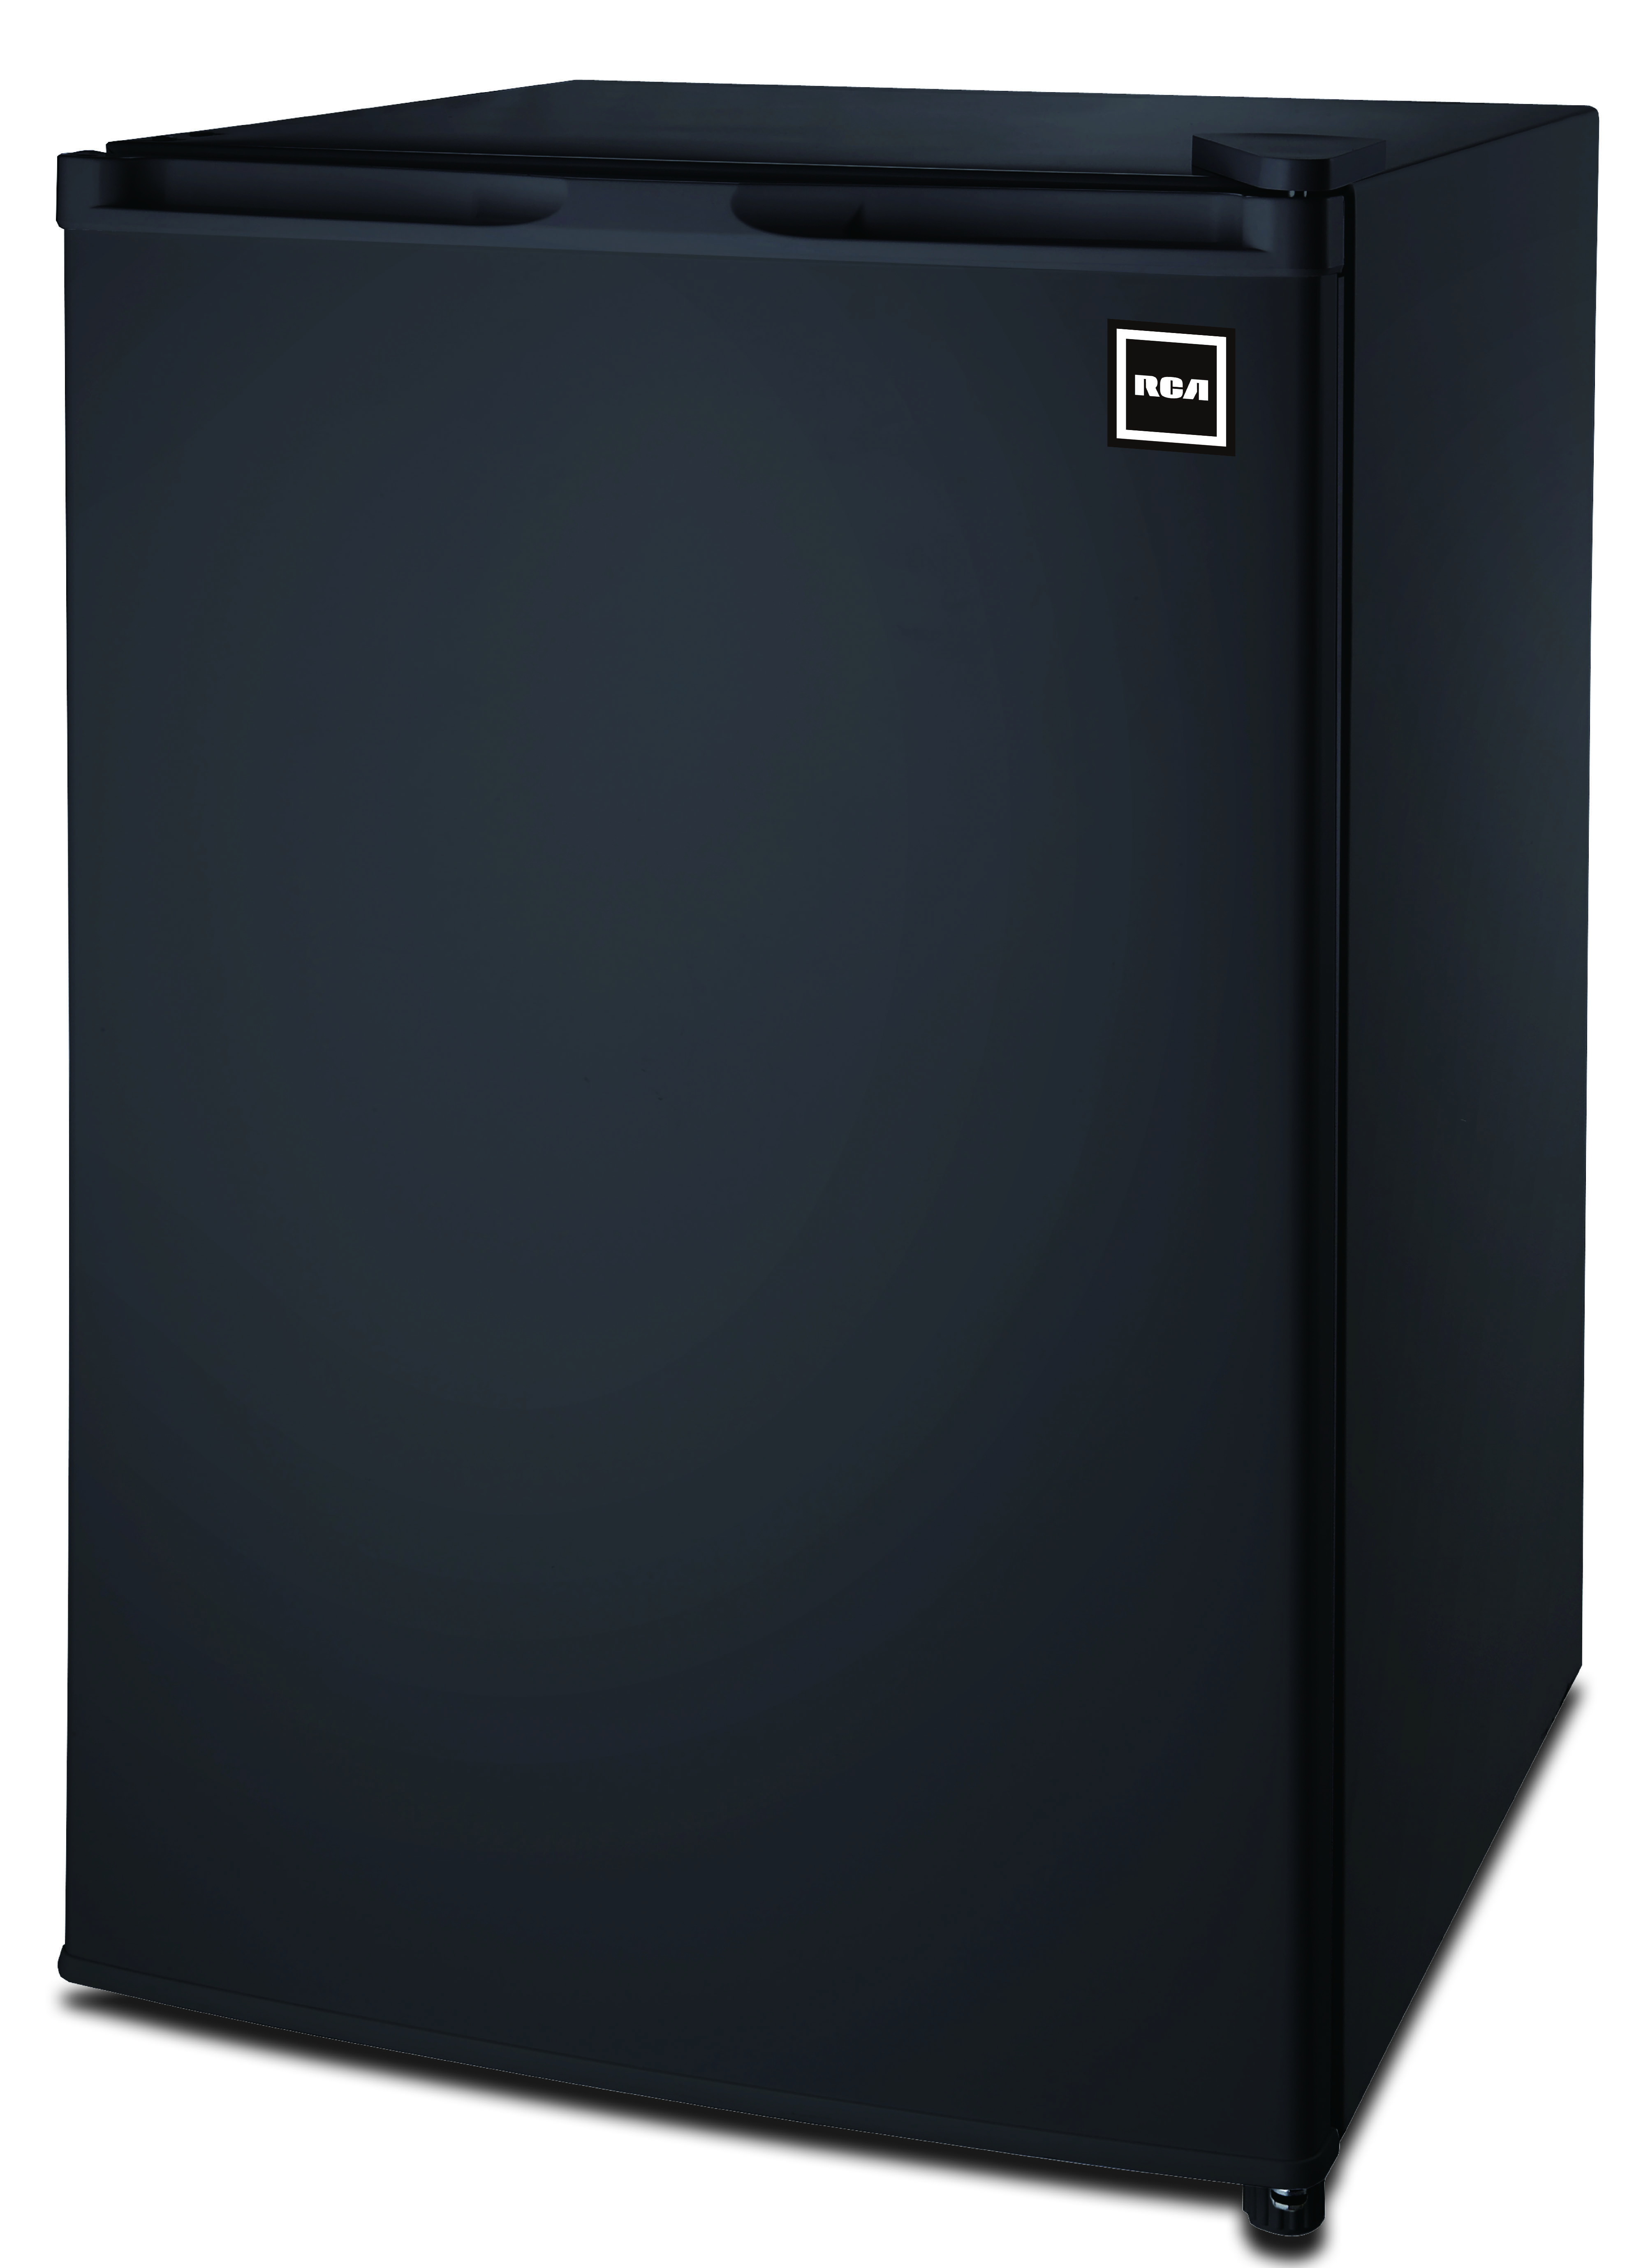 RCA 4.5 Cu ft Single Door Compact Refrigerator RFR464, Black - image 1 of 5